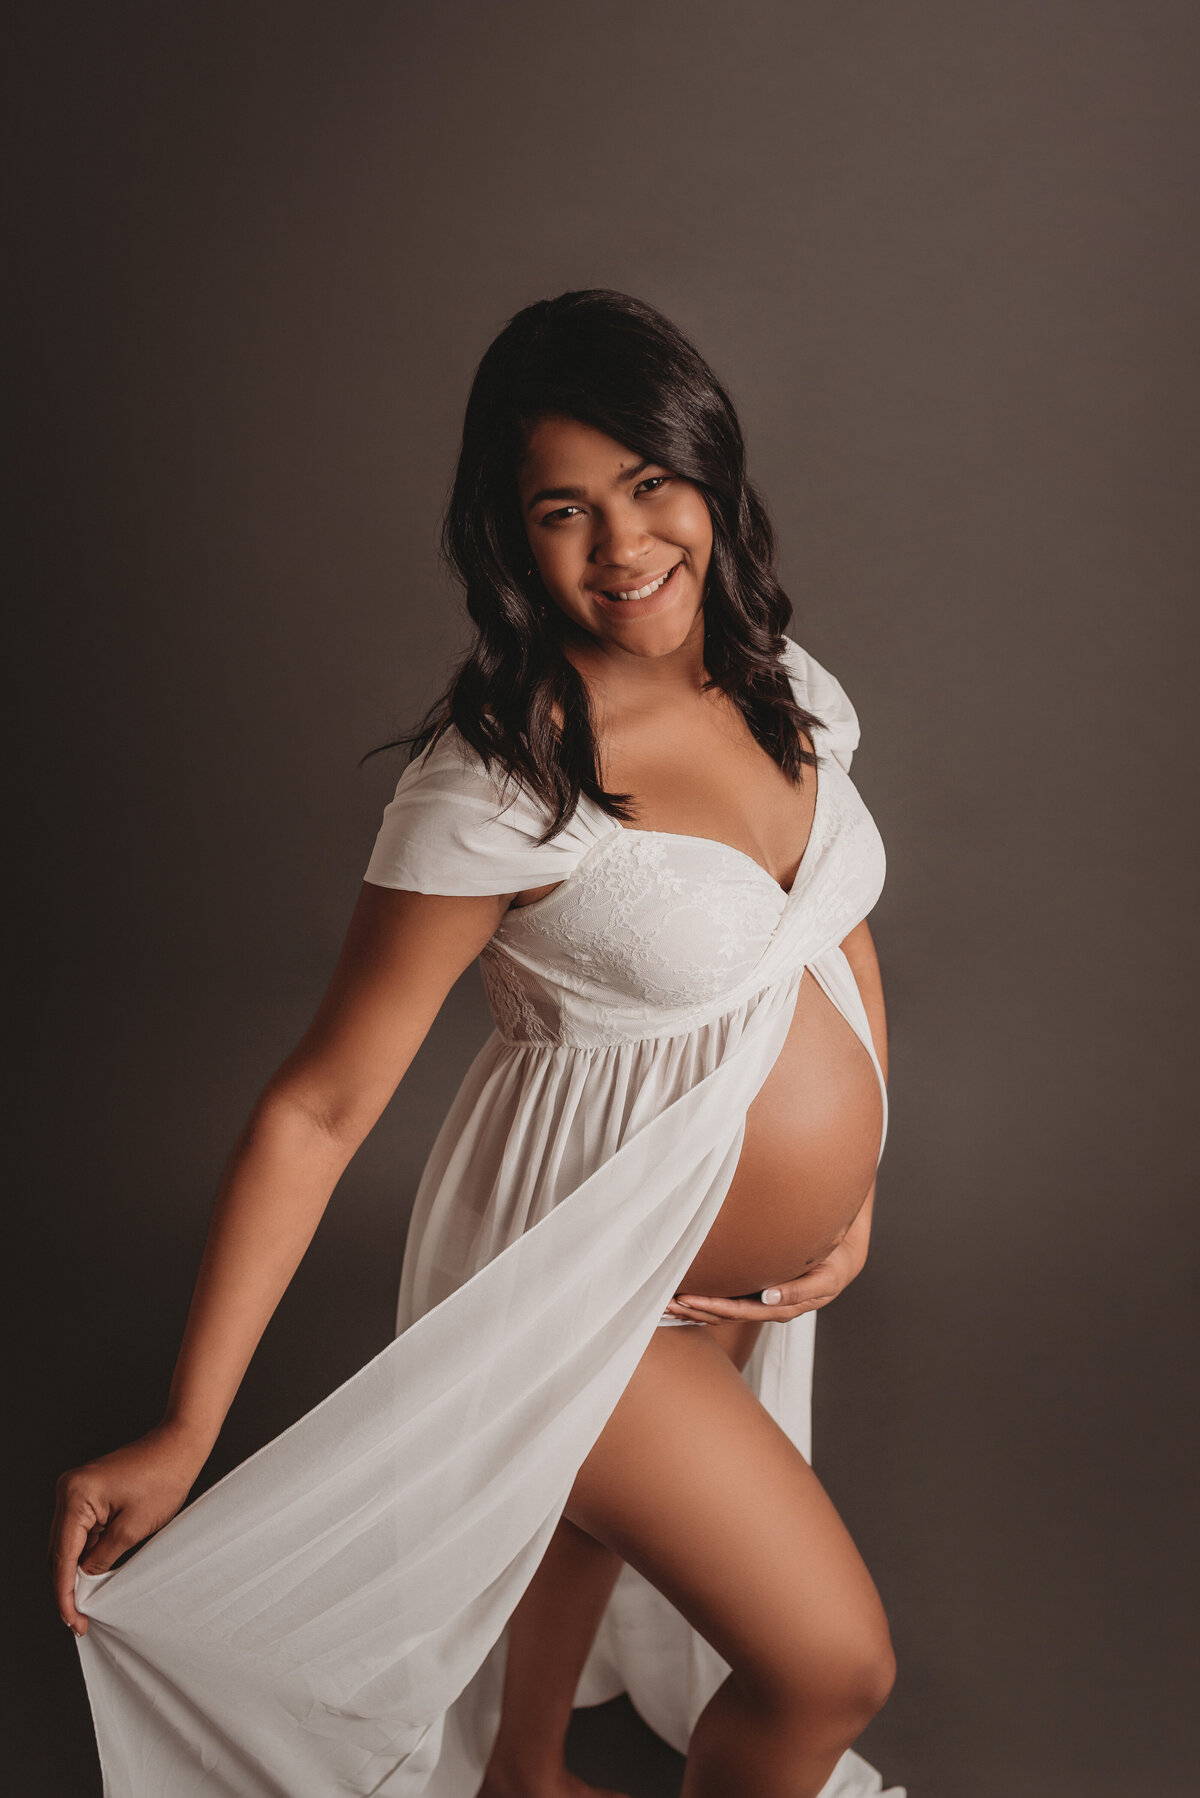 Pregnant woman wearing white sheer dress